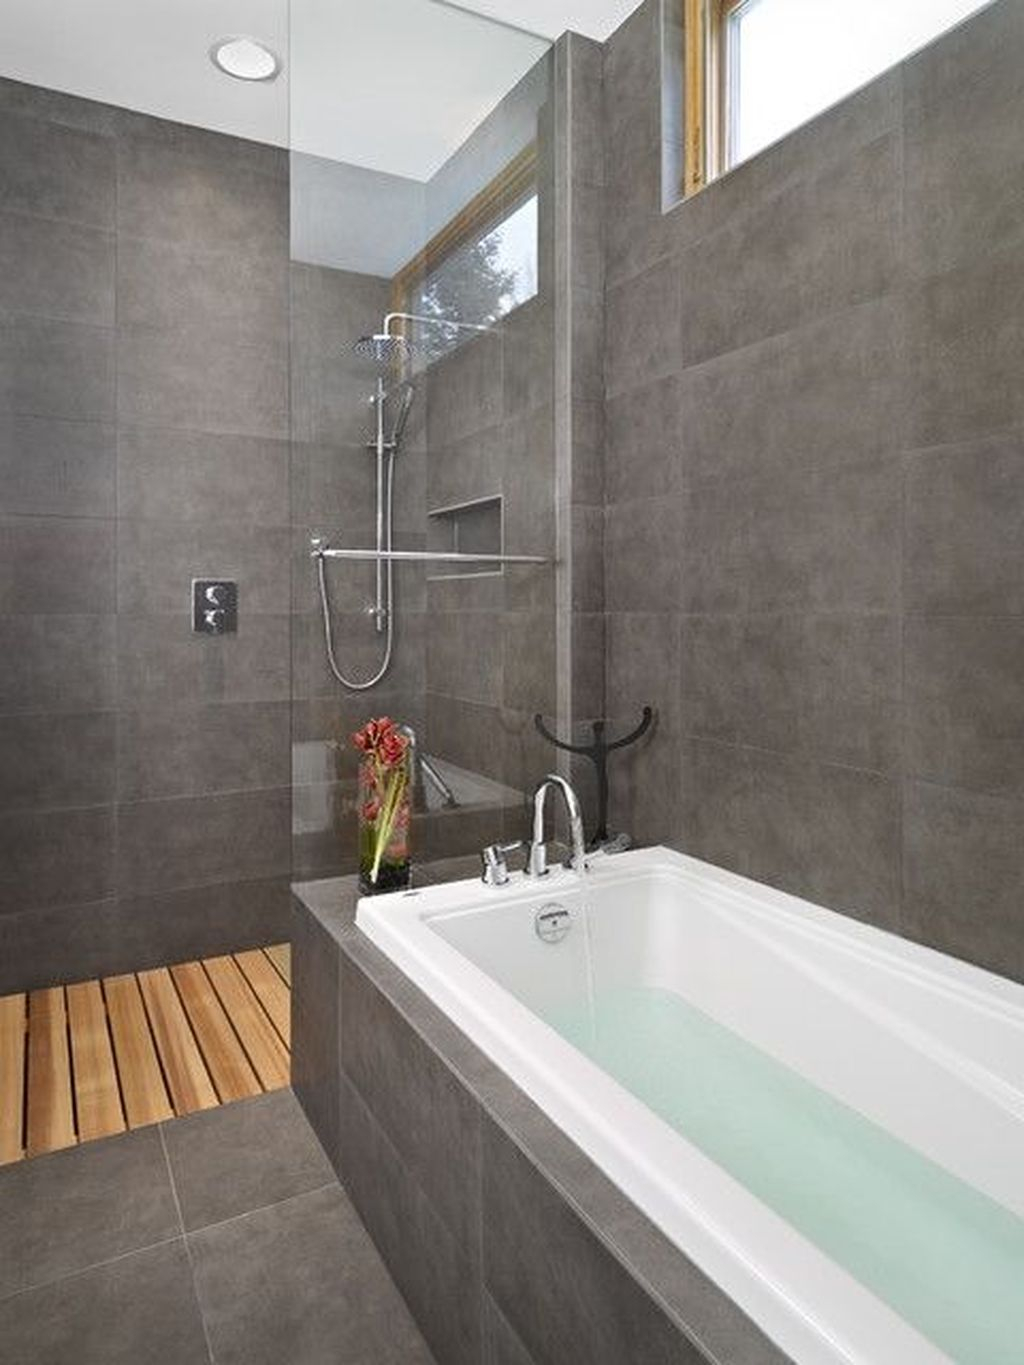 Marvelous Wooden Shower Floor Tiles Designs Ideas For Bathroom Remodel 18